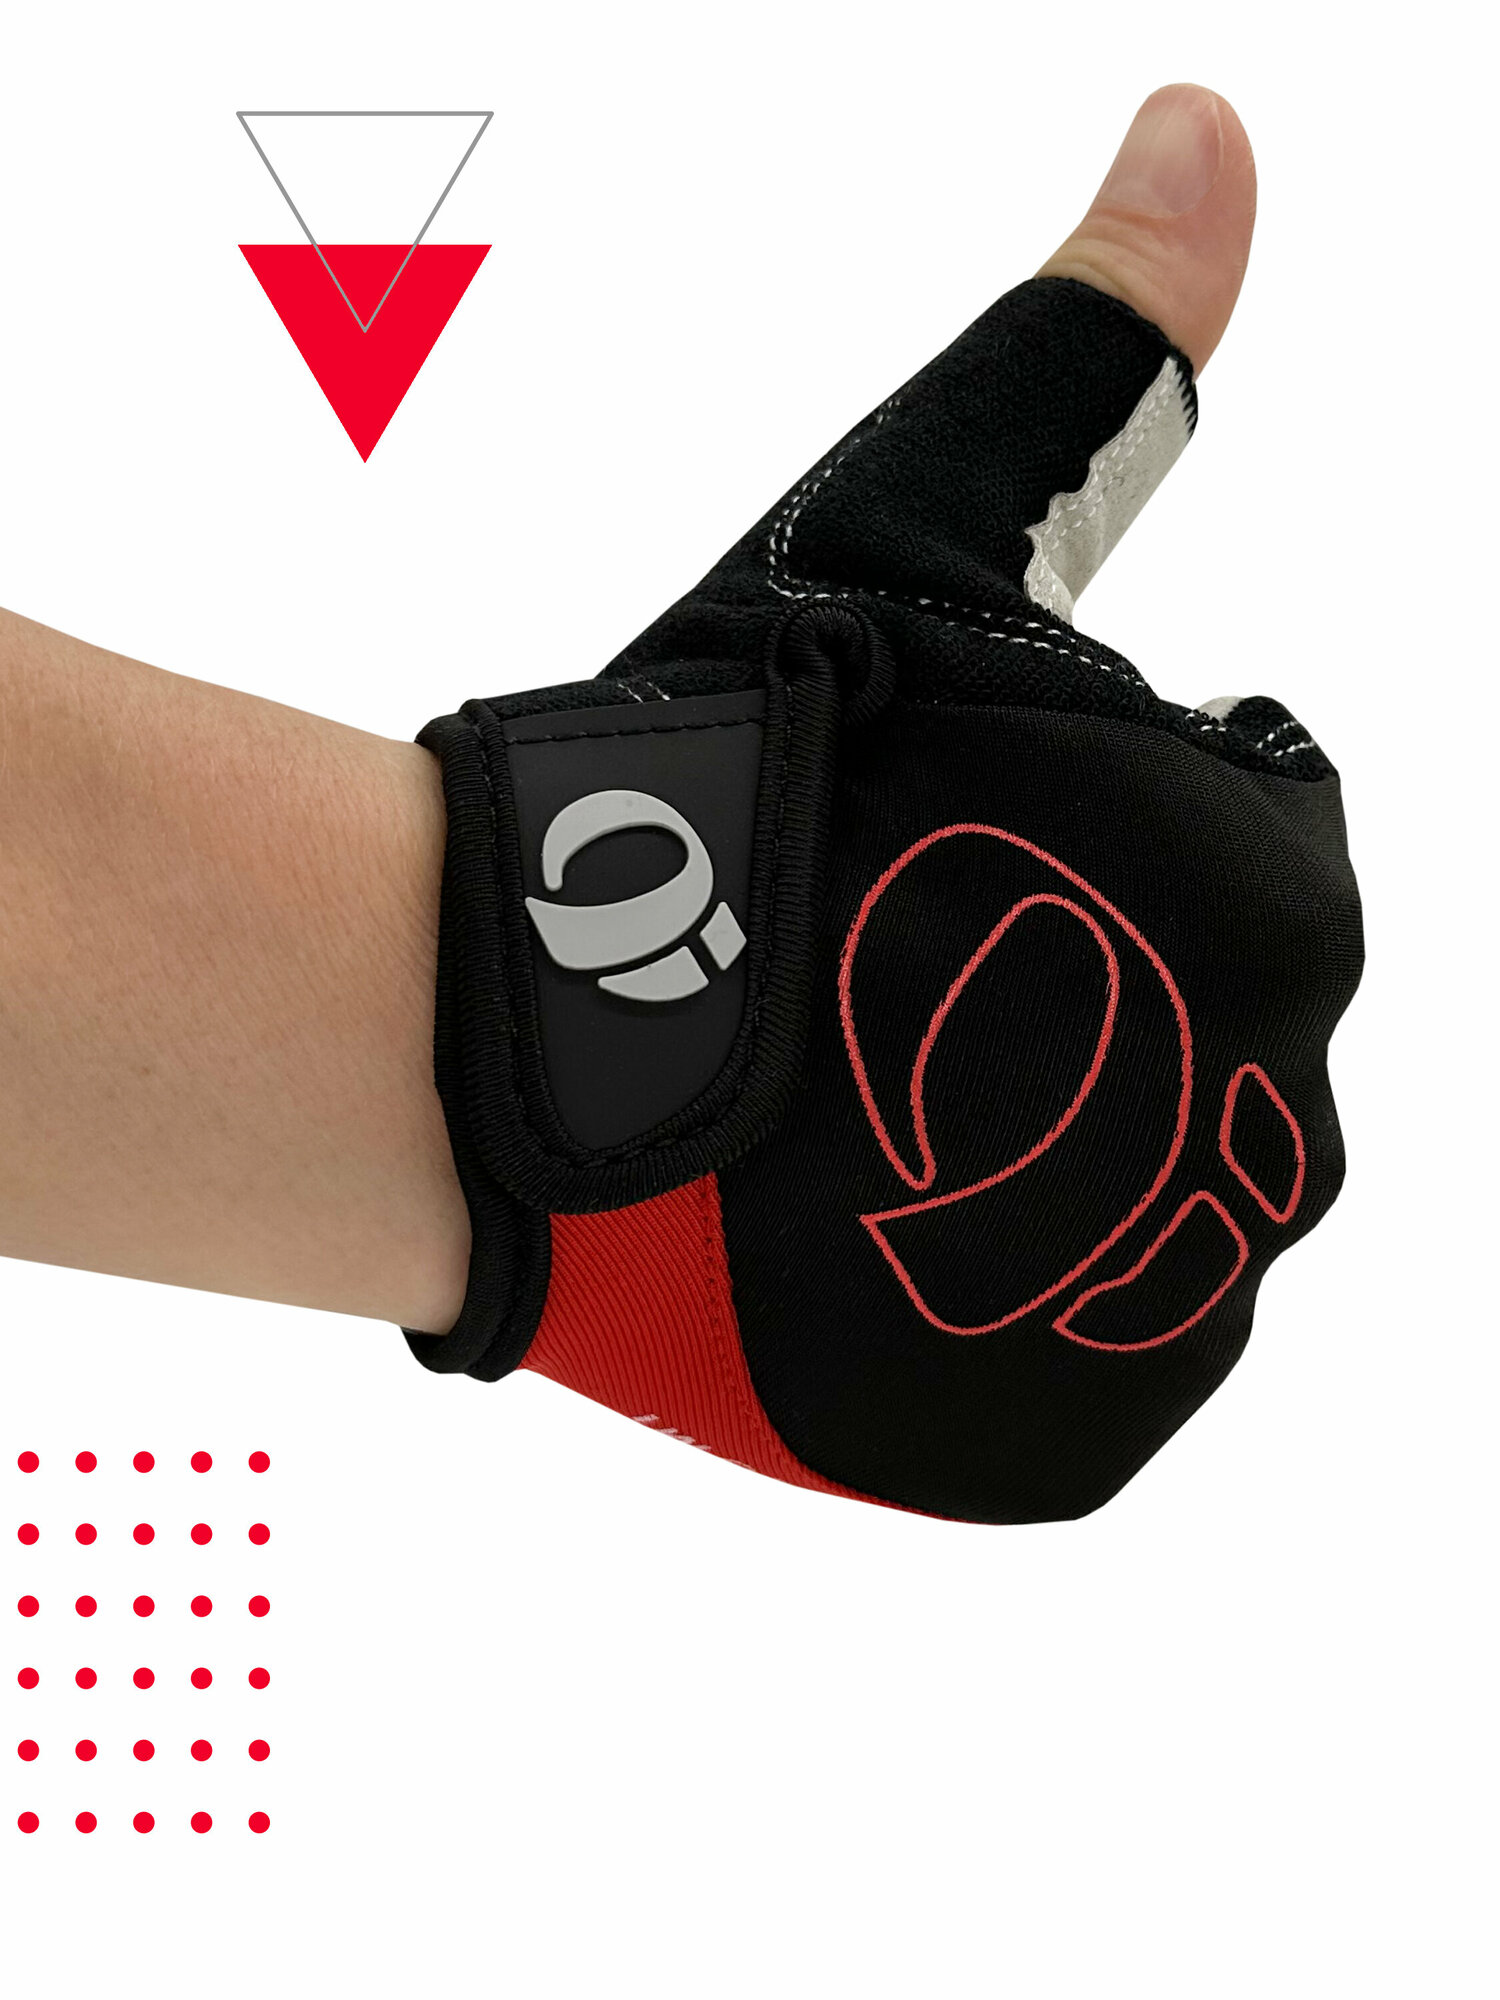 Перчатки для фитнеса Boomshakalaka, цвет черно-серо-красный, размер XL, обхват ладони 230-250 мм.